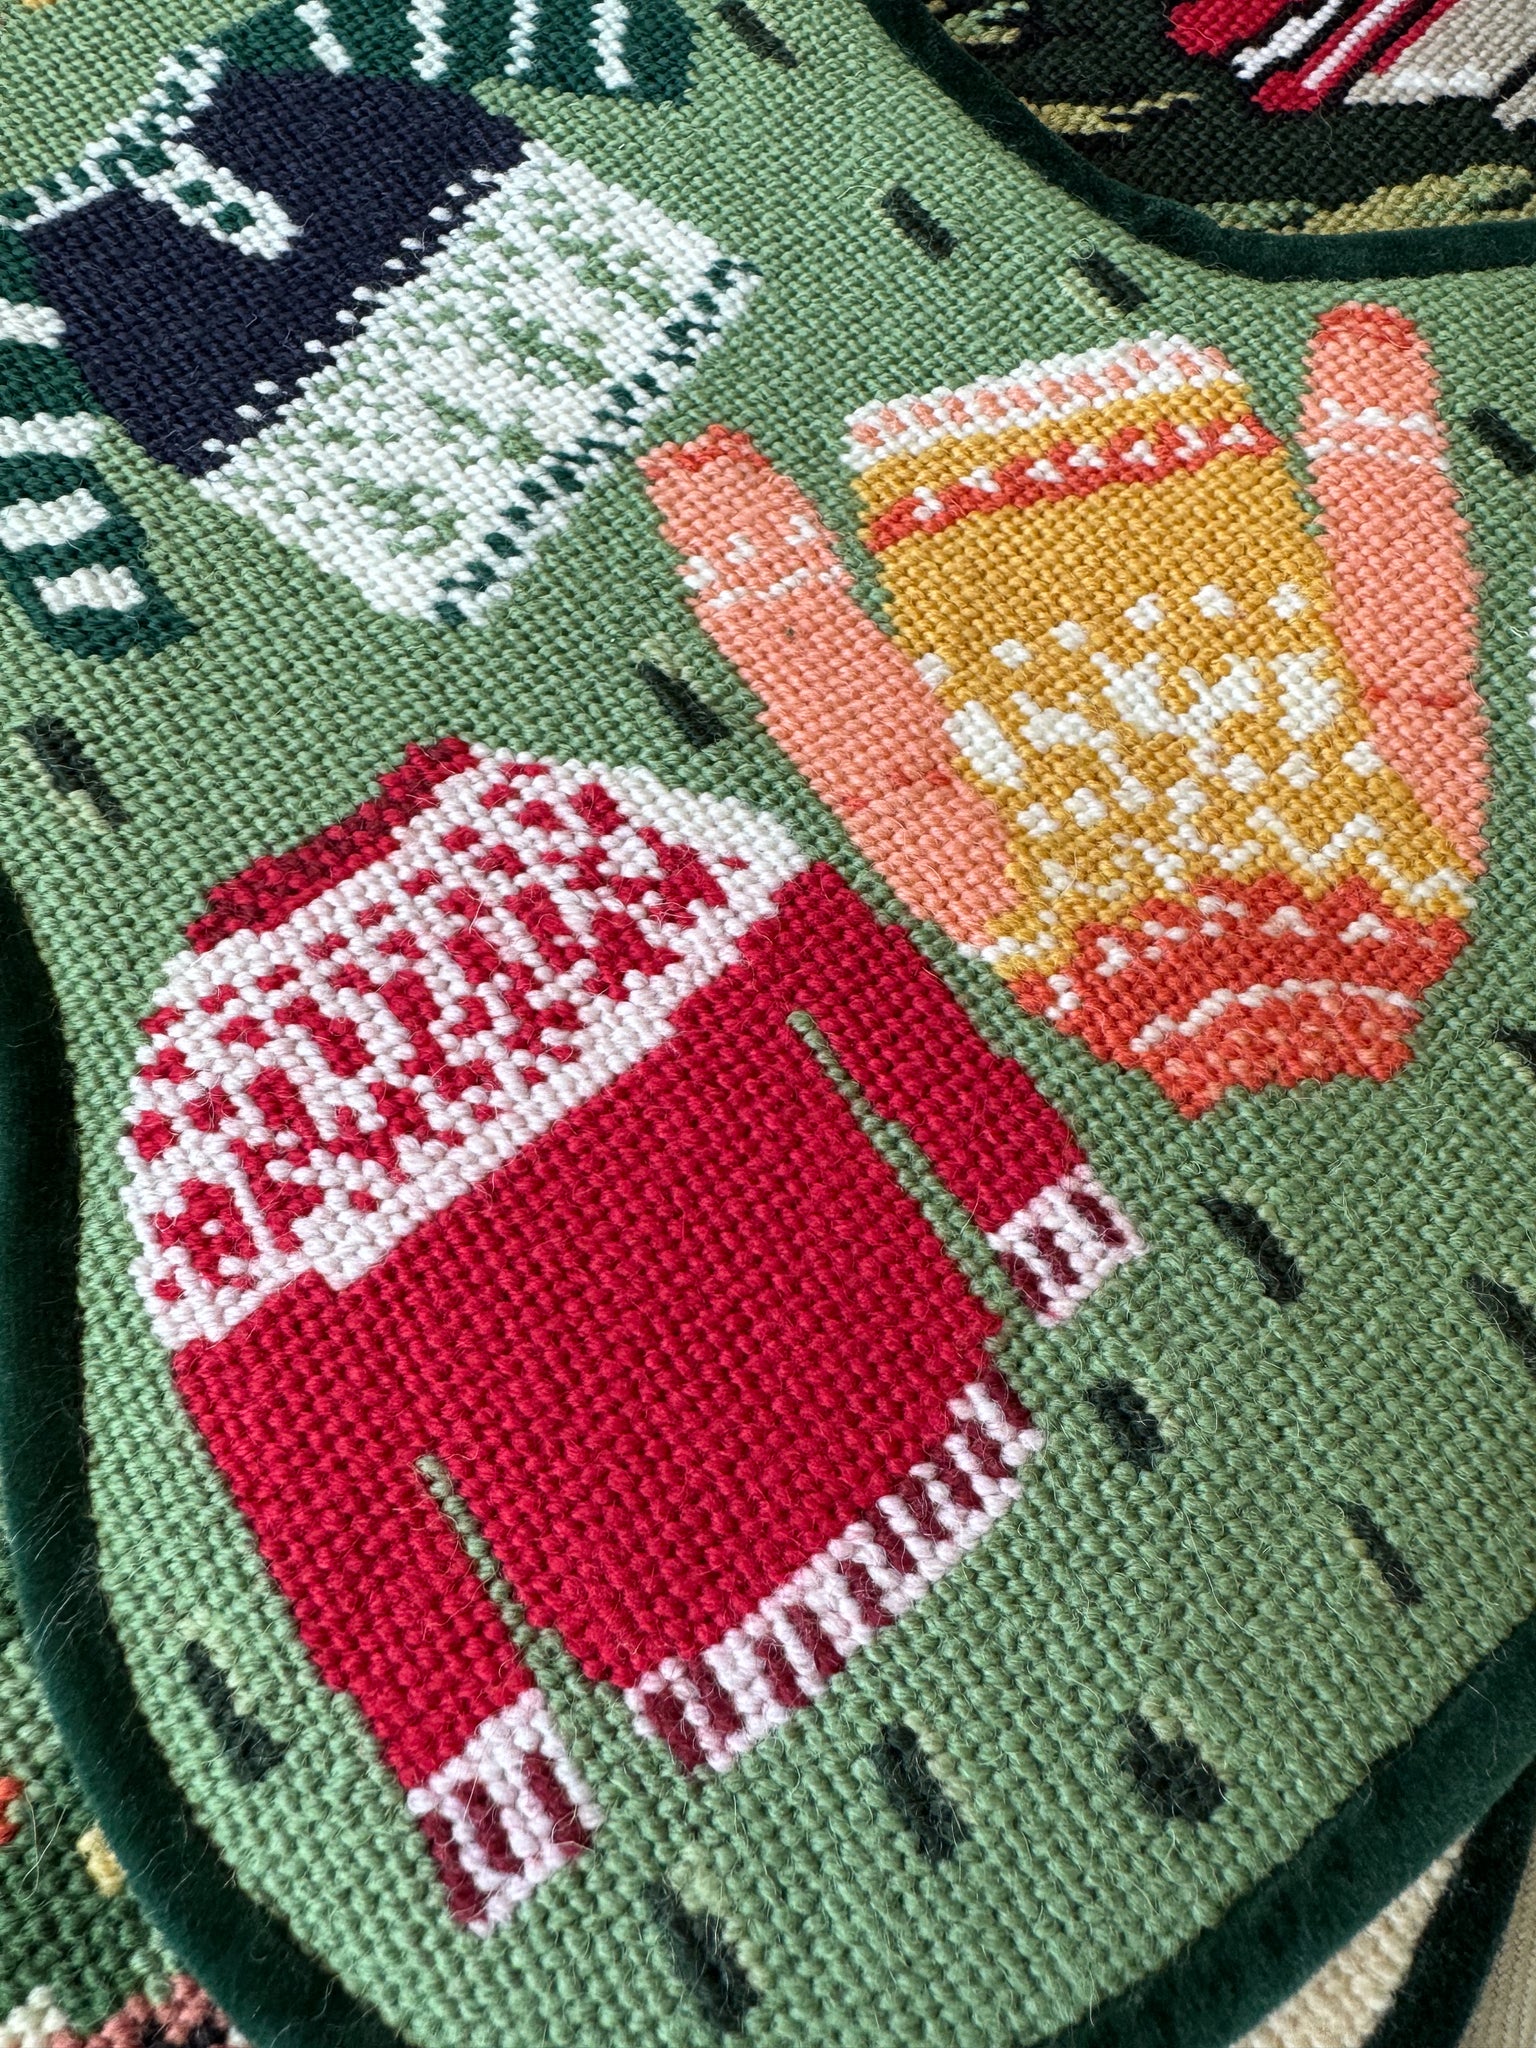 Stitched Stocking - Festive Sweaters